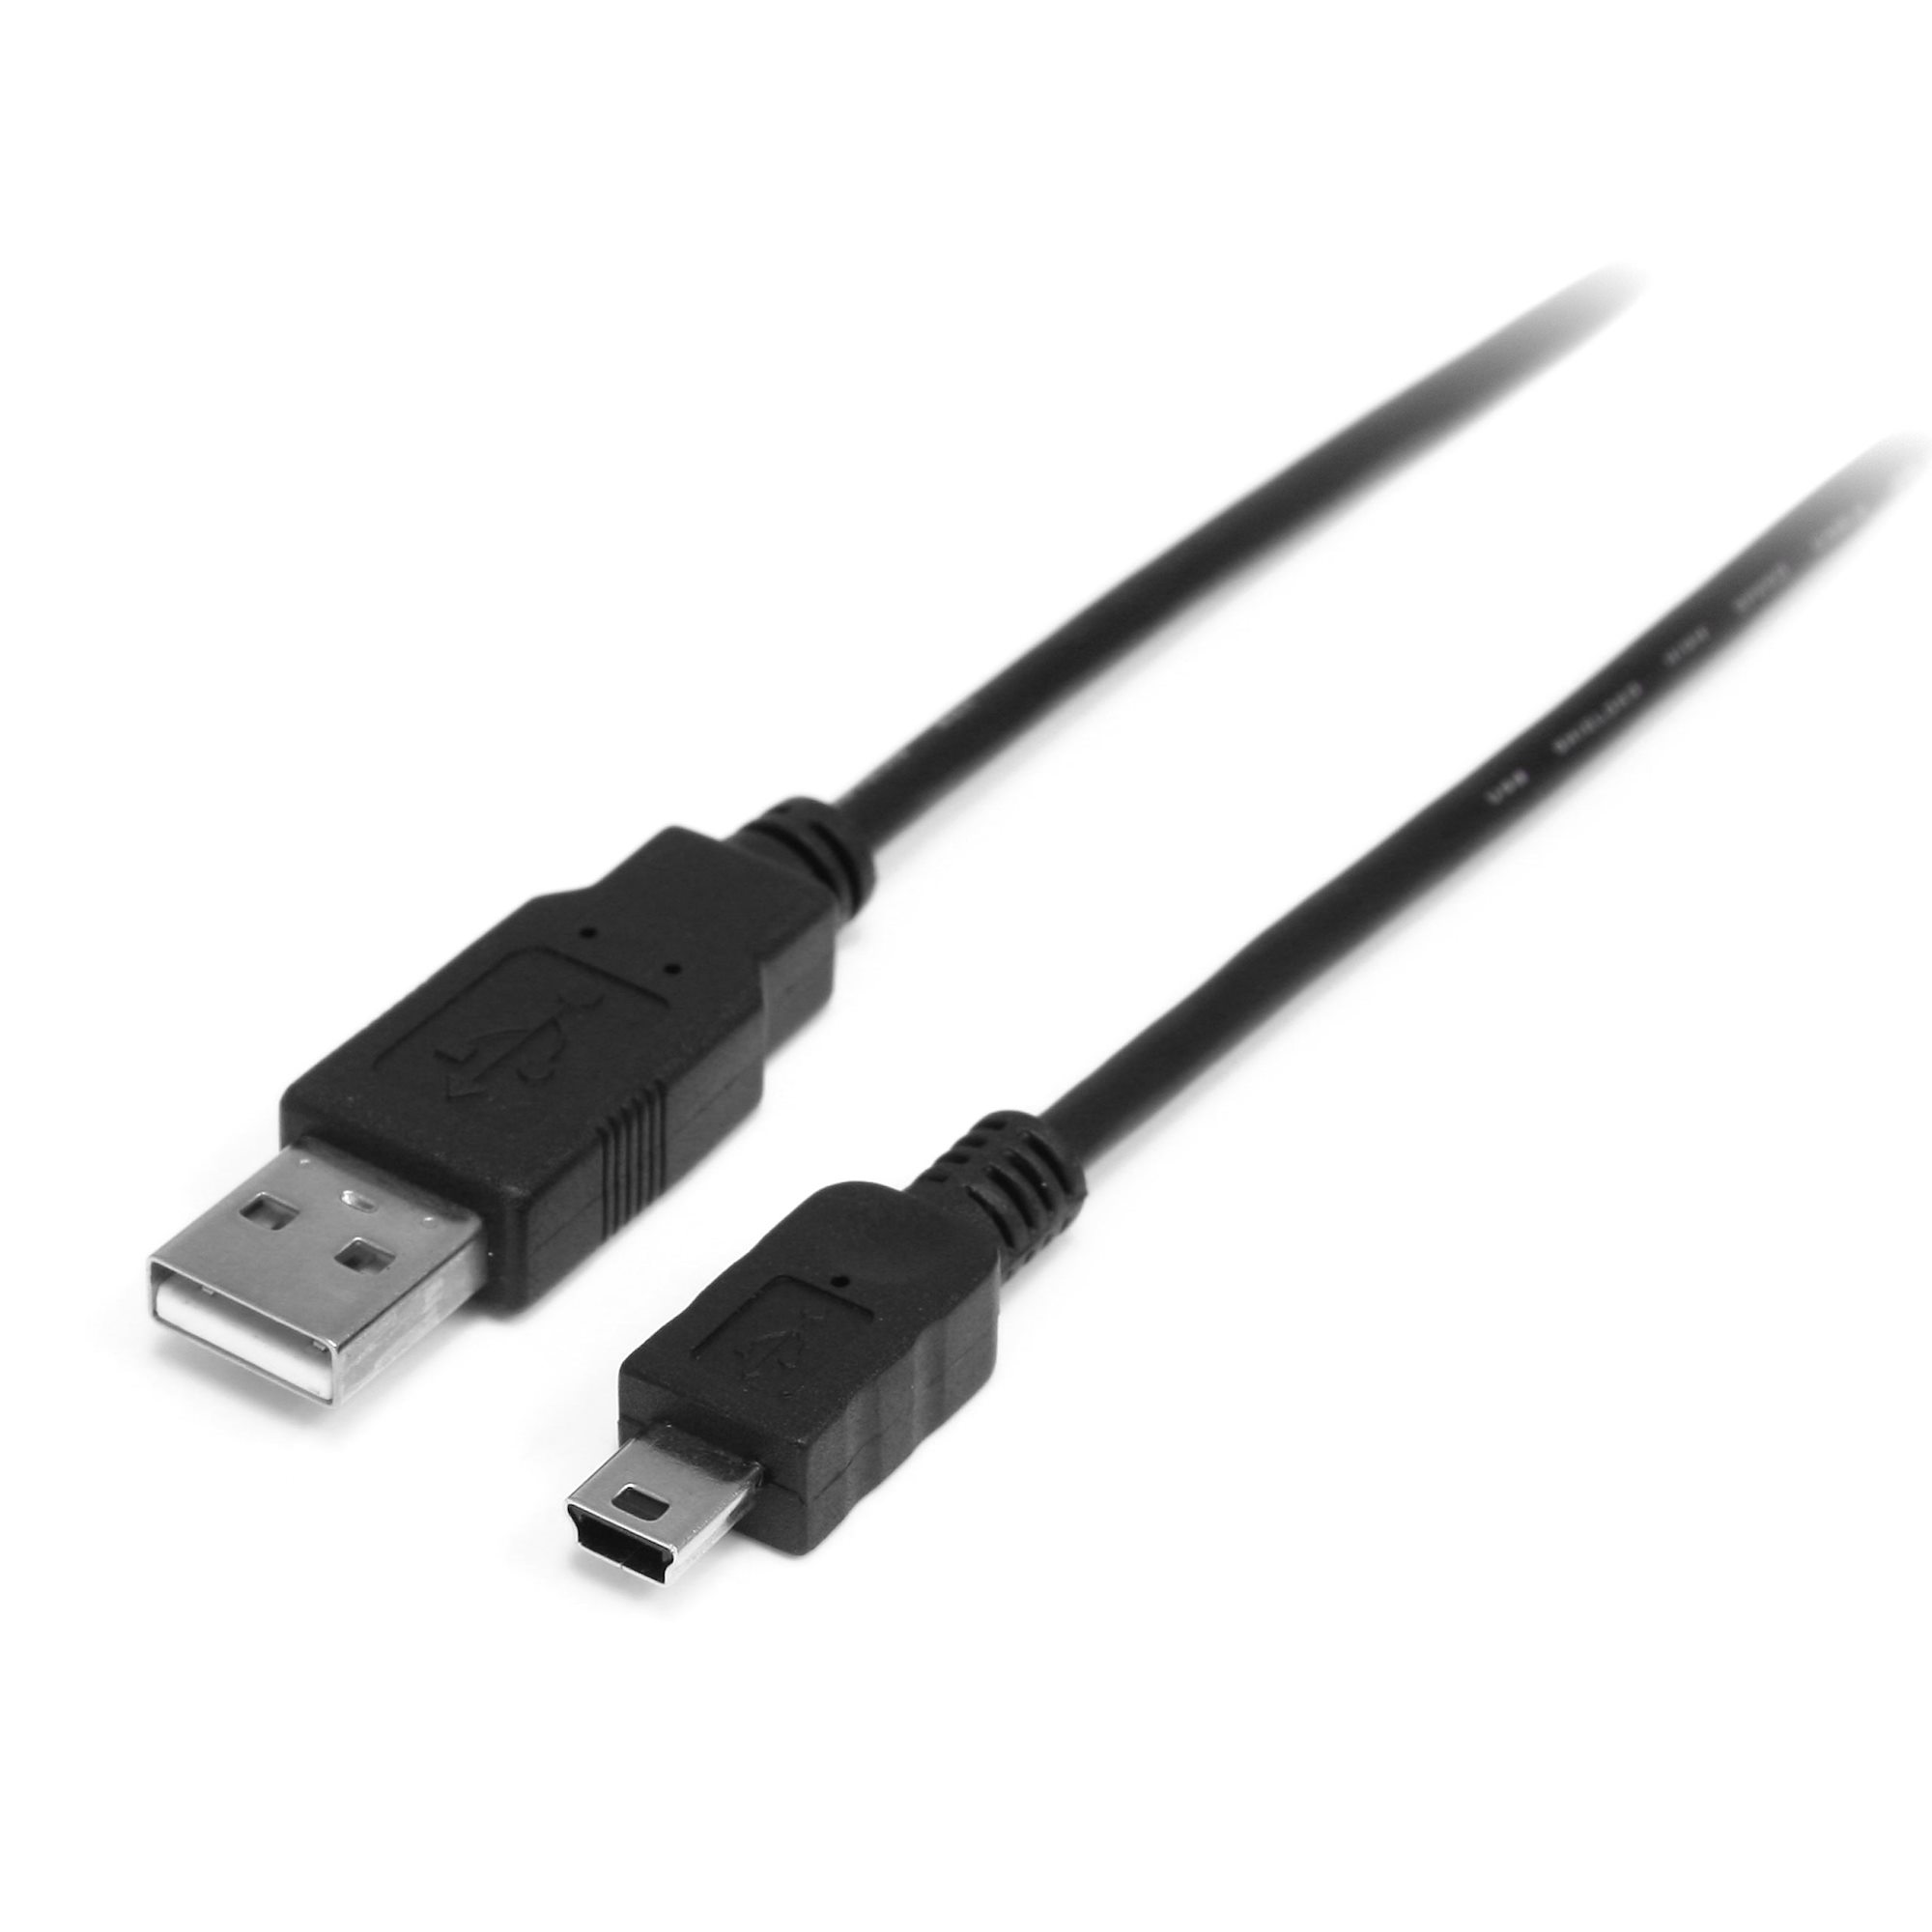 1m Mini USB 2.0 Cable - A to Mini B - Mini USB Cables & Adapters | Spain